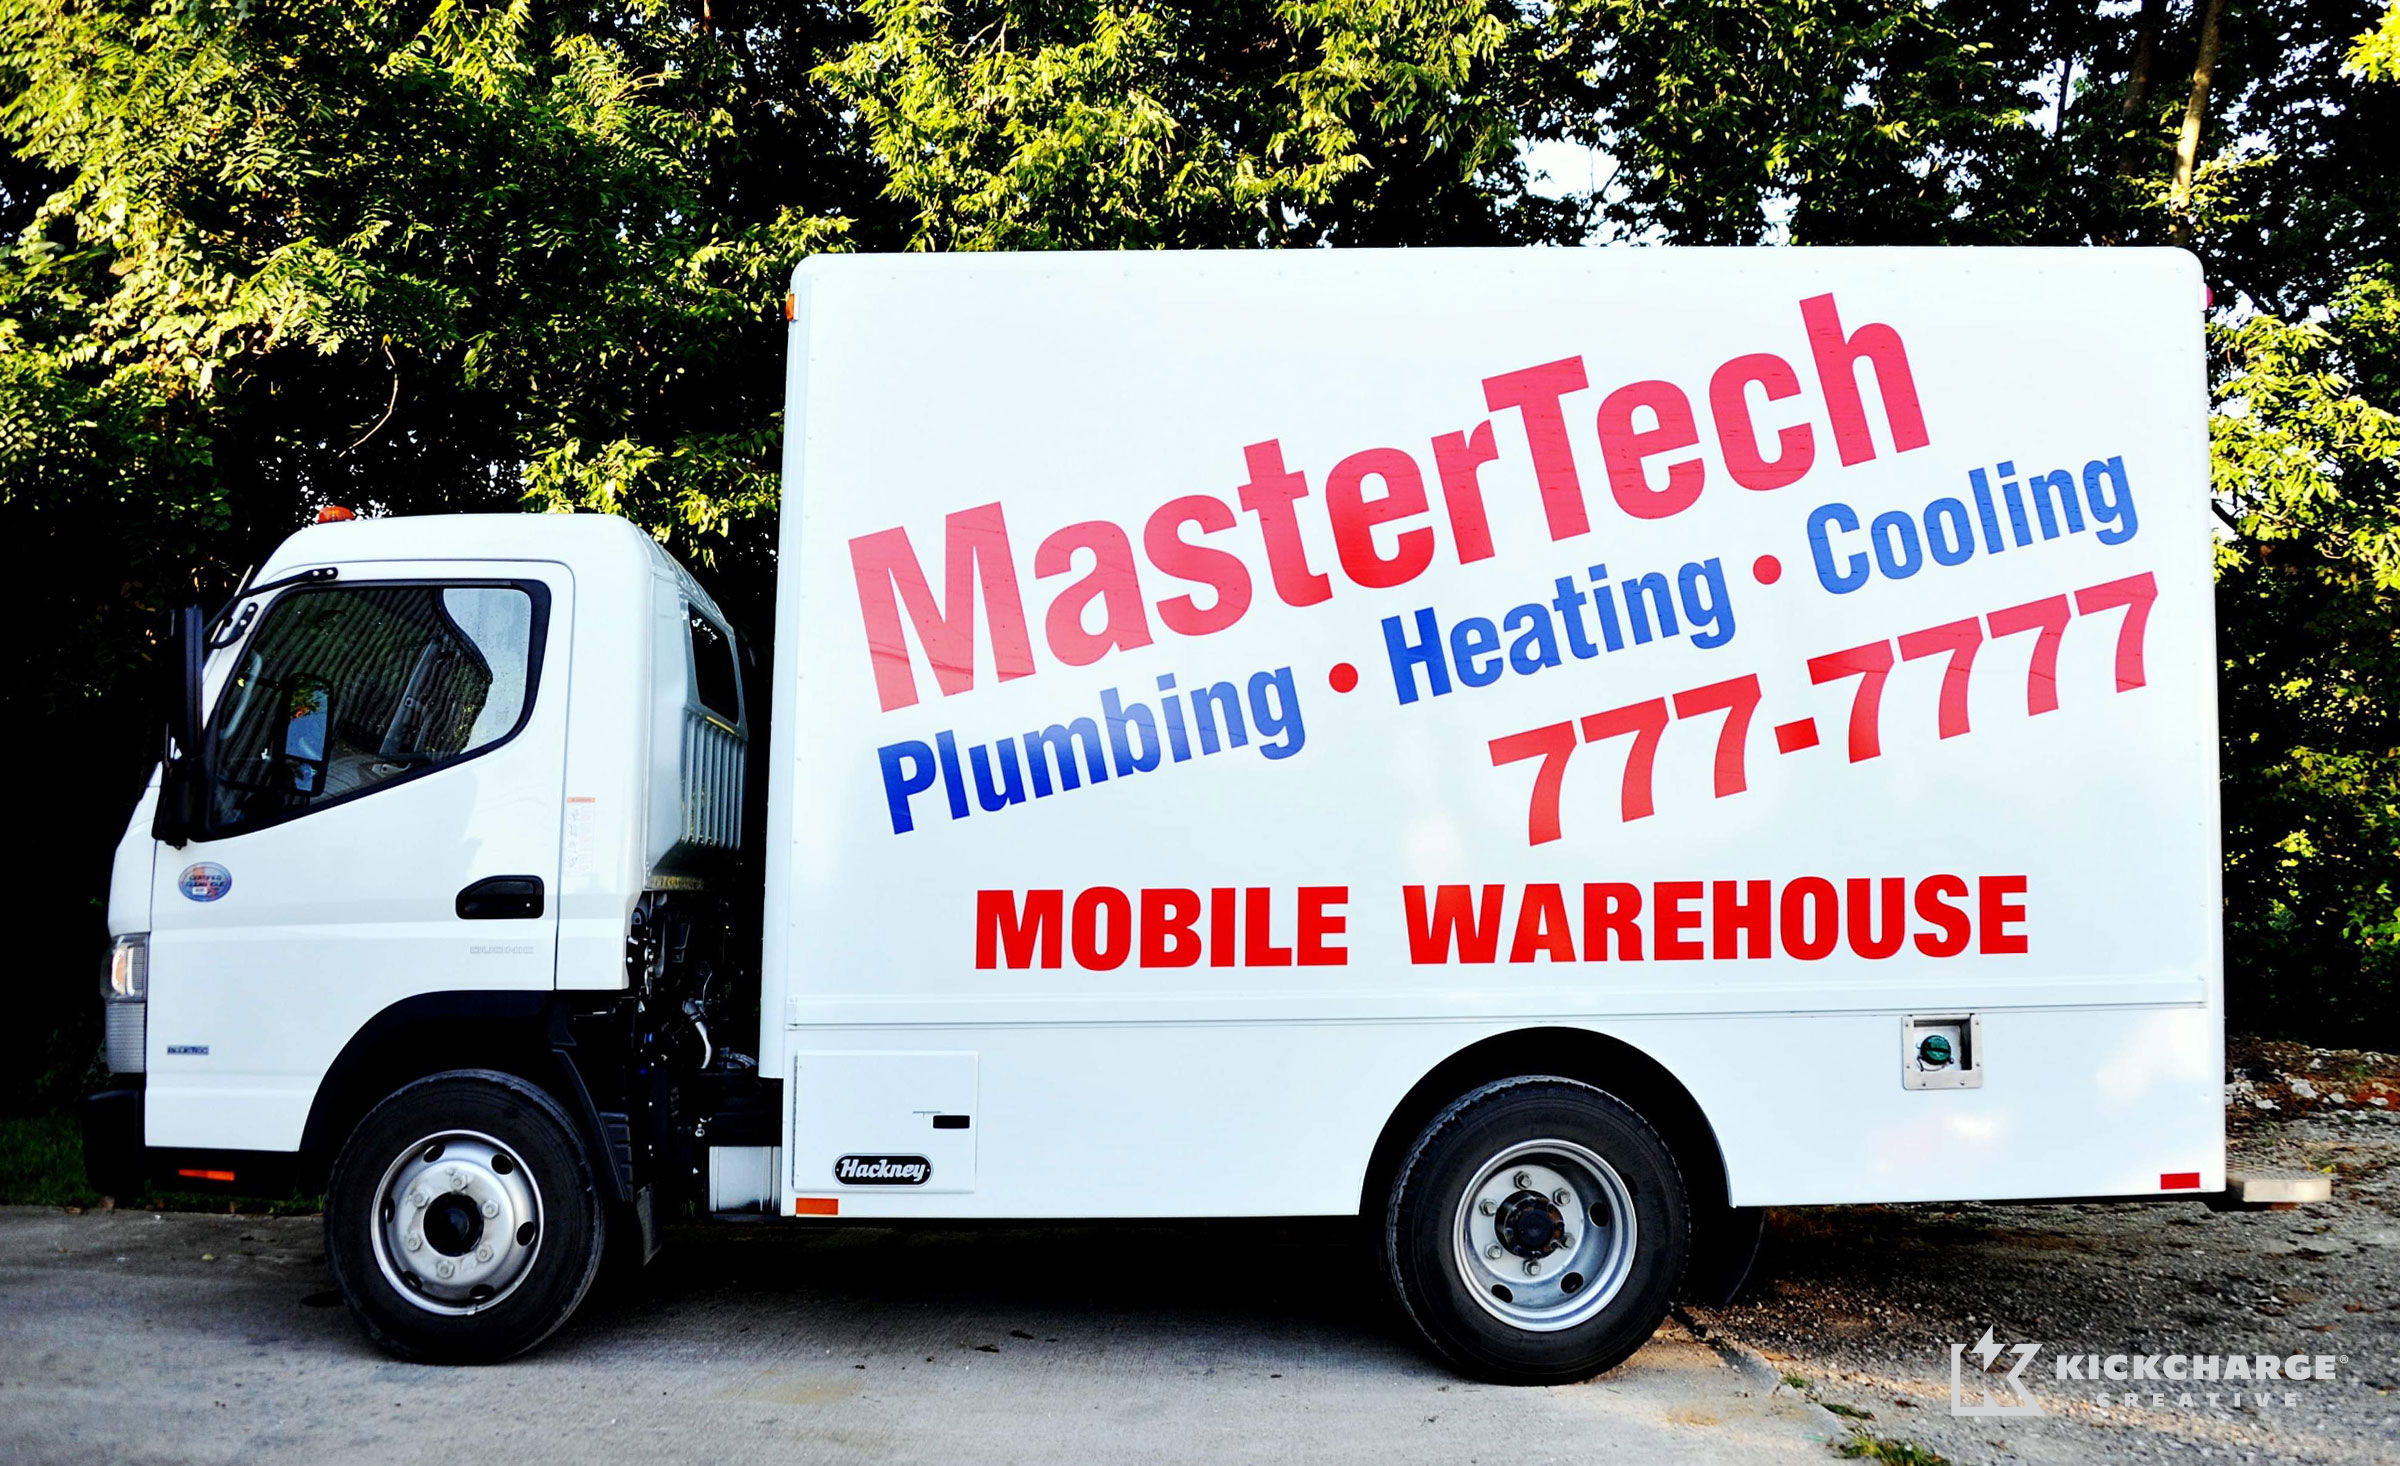 MasterTech Plumbing, Heating & Cooling